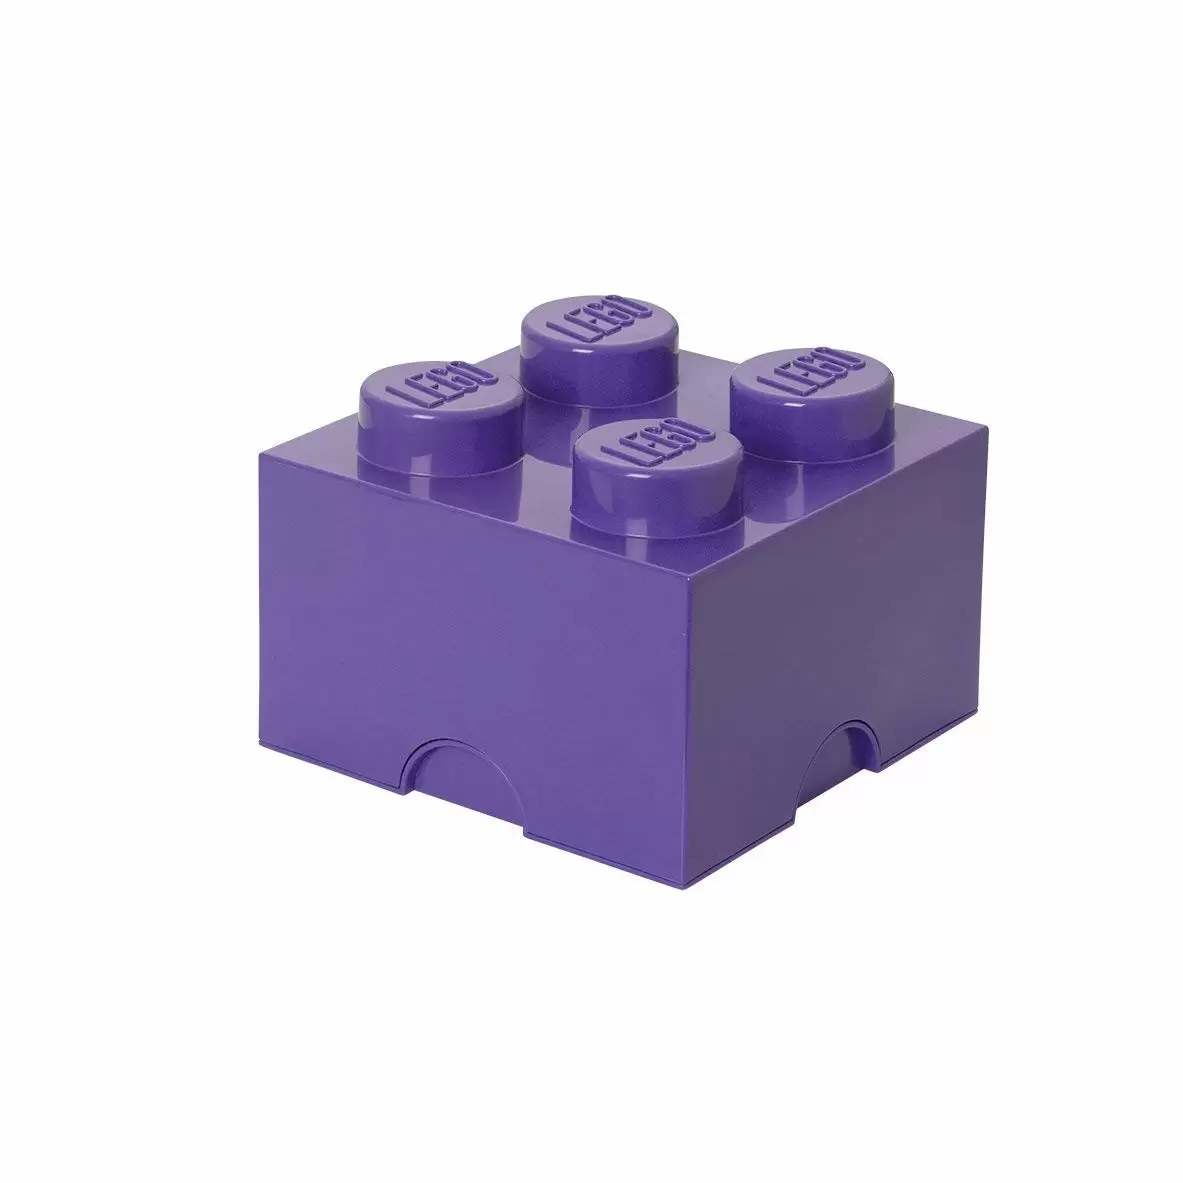 LEGO Storages - LEGO Storage Brick 4 - Purple